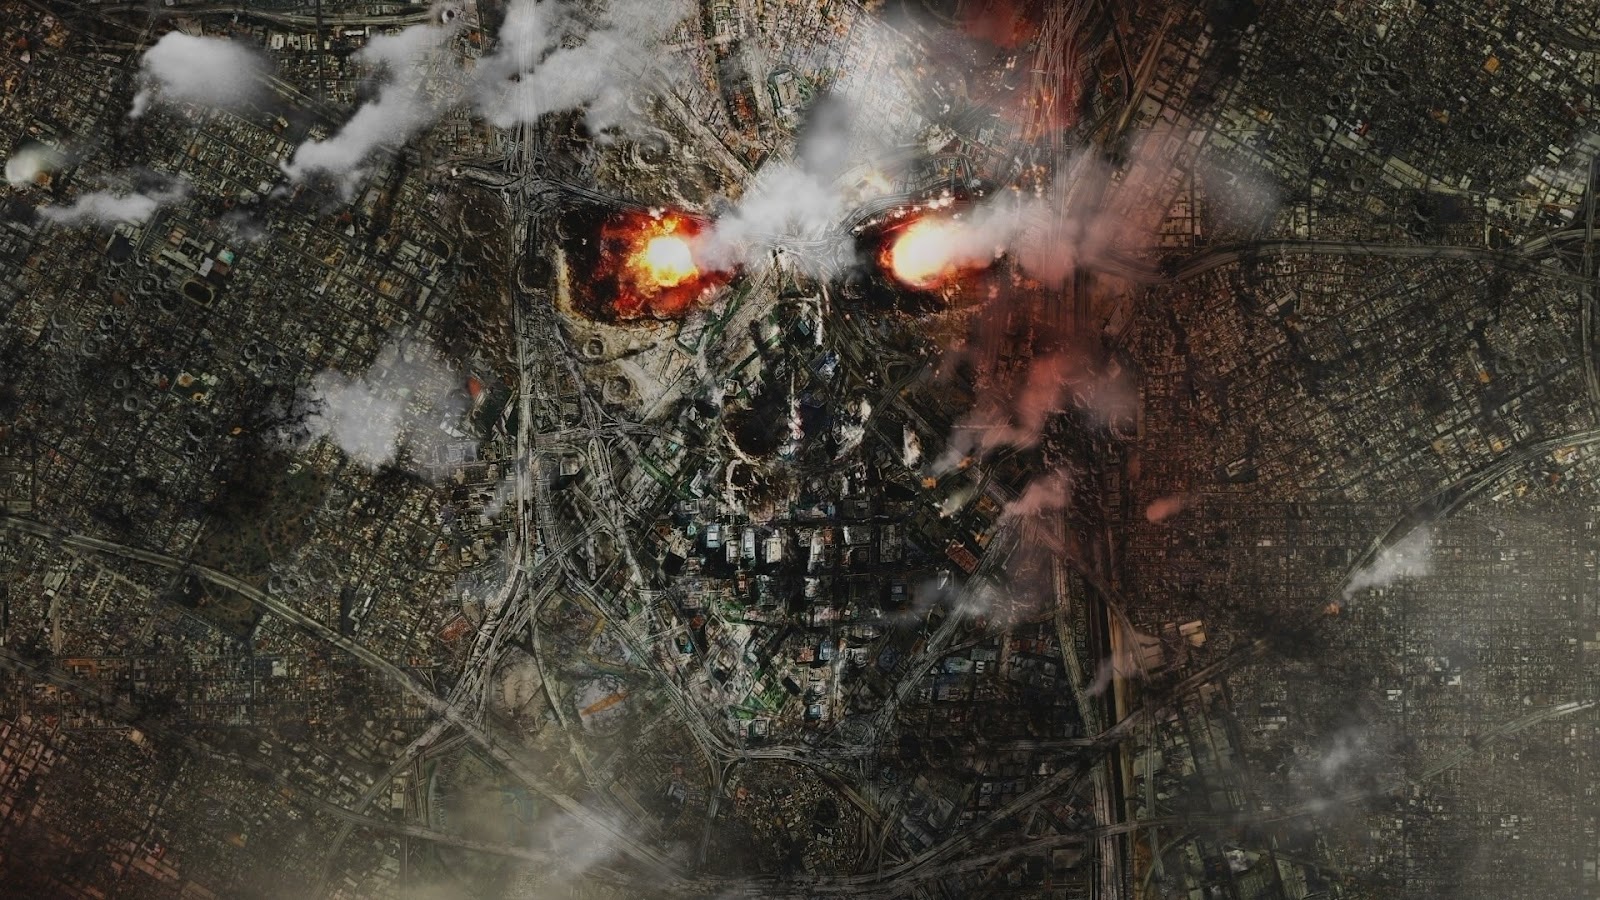 Terminator HD Wallpaper Poster Movies Fondo De